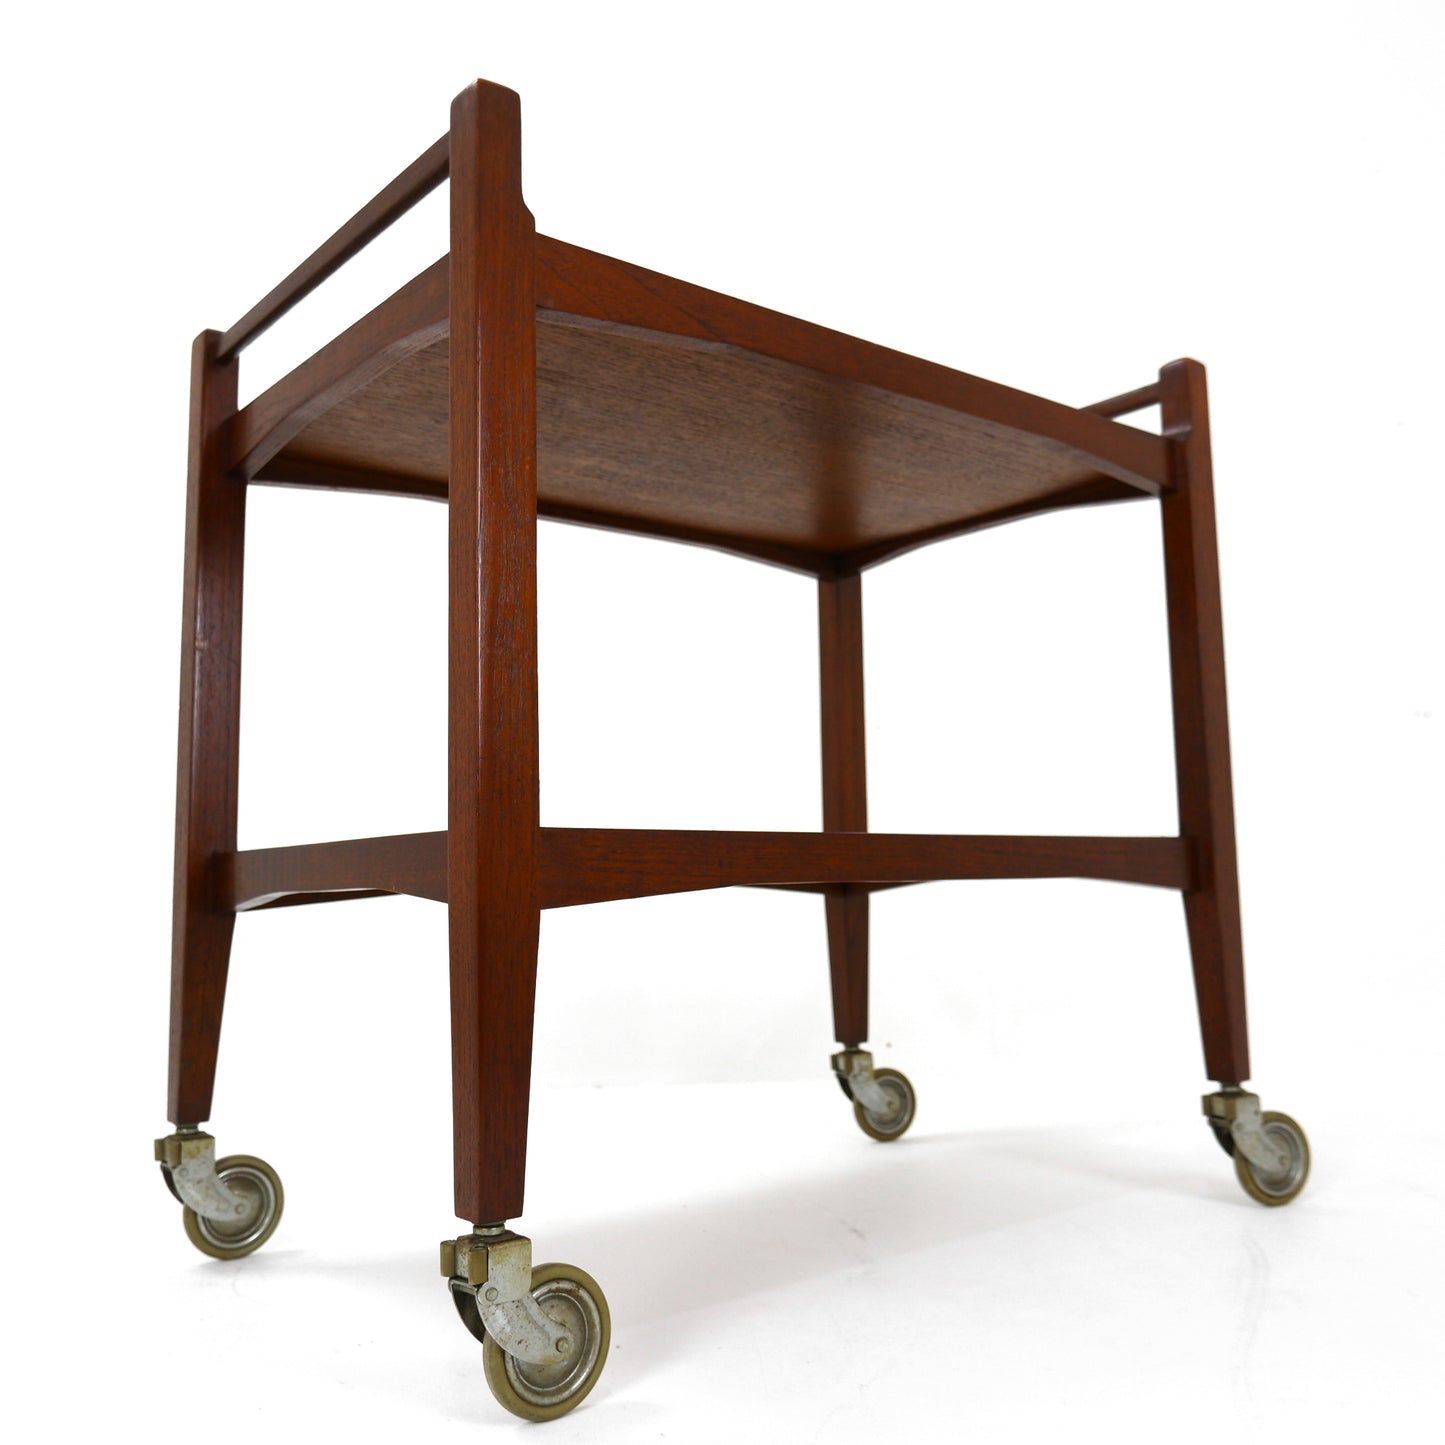 Danish Teak Drinks Trolley / Bar Cart - Mid Century Modern